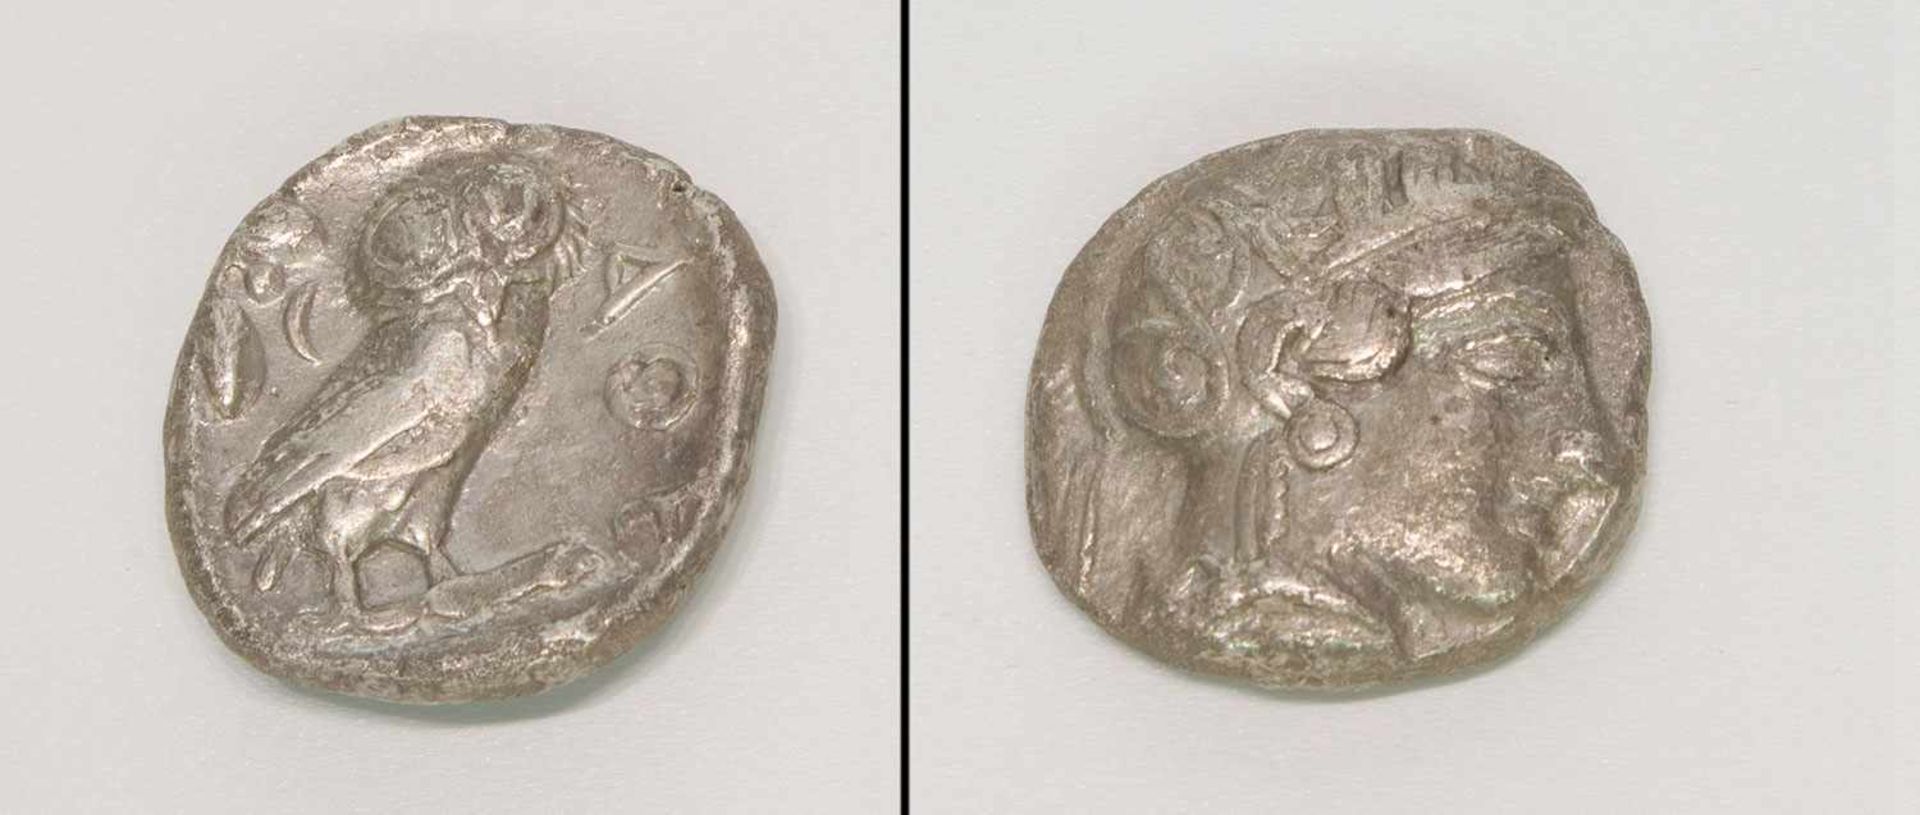 TetradrachmeAttica/ Athen ca. 454 - 404 v.Chr., Kopf d. athene mit Helm/ Eule nach links stehend,